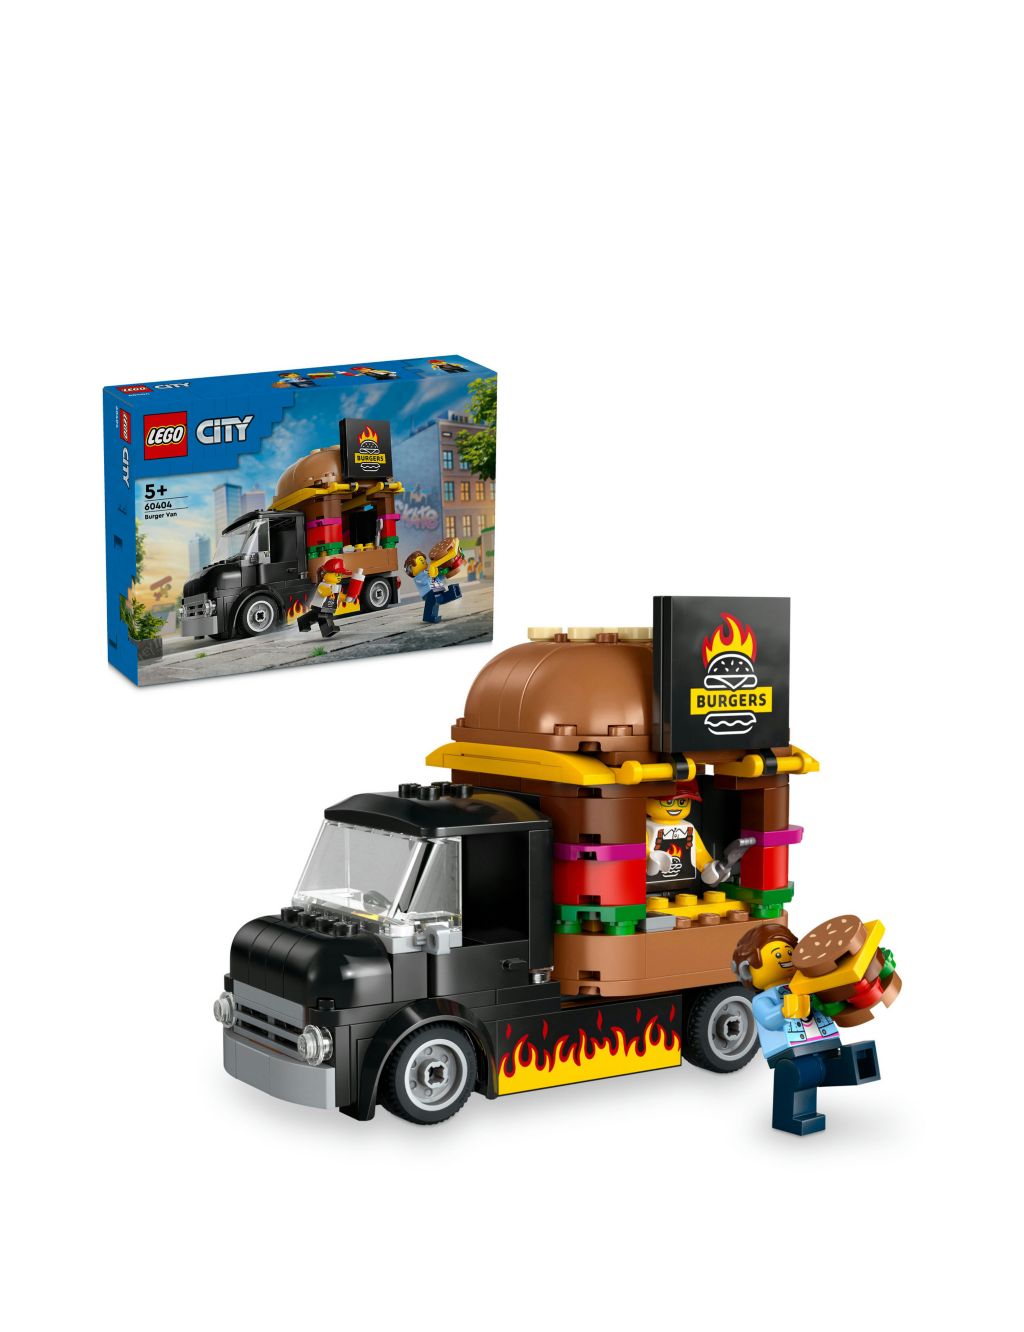 LEGO® City Burger Van Toy Building Set 60404 (5+ Yrs)